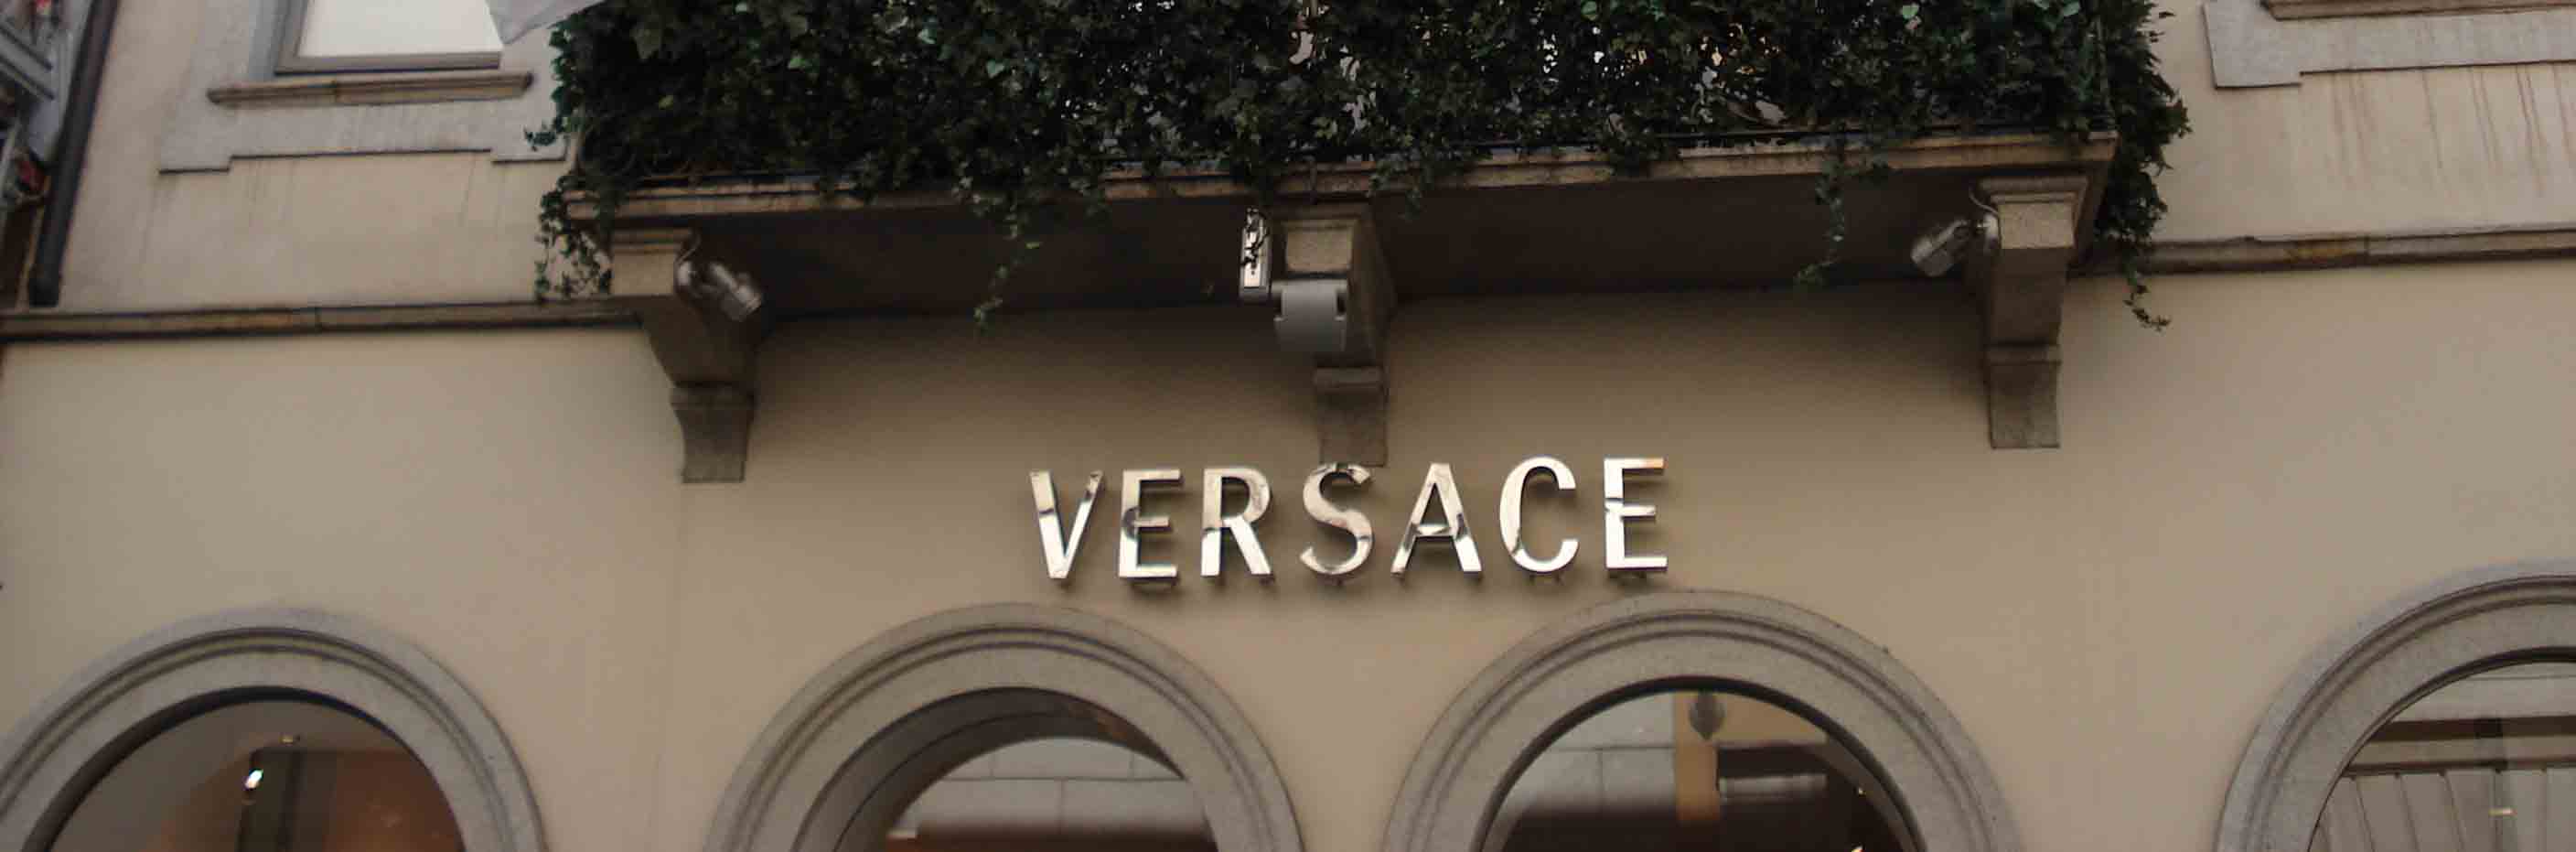 Can Michael Kors Keep Versace Fans Happy?